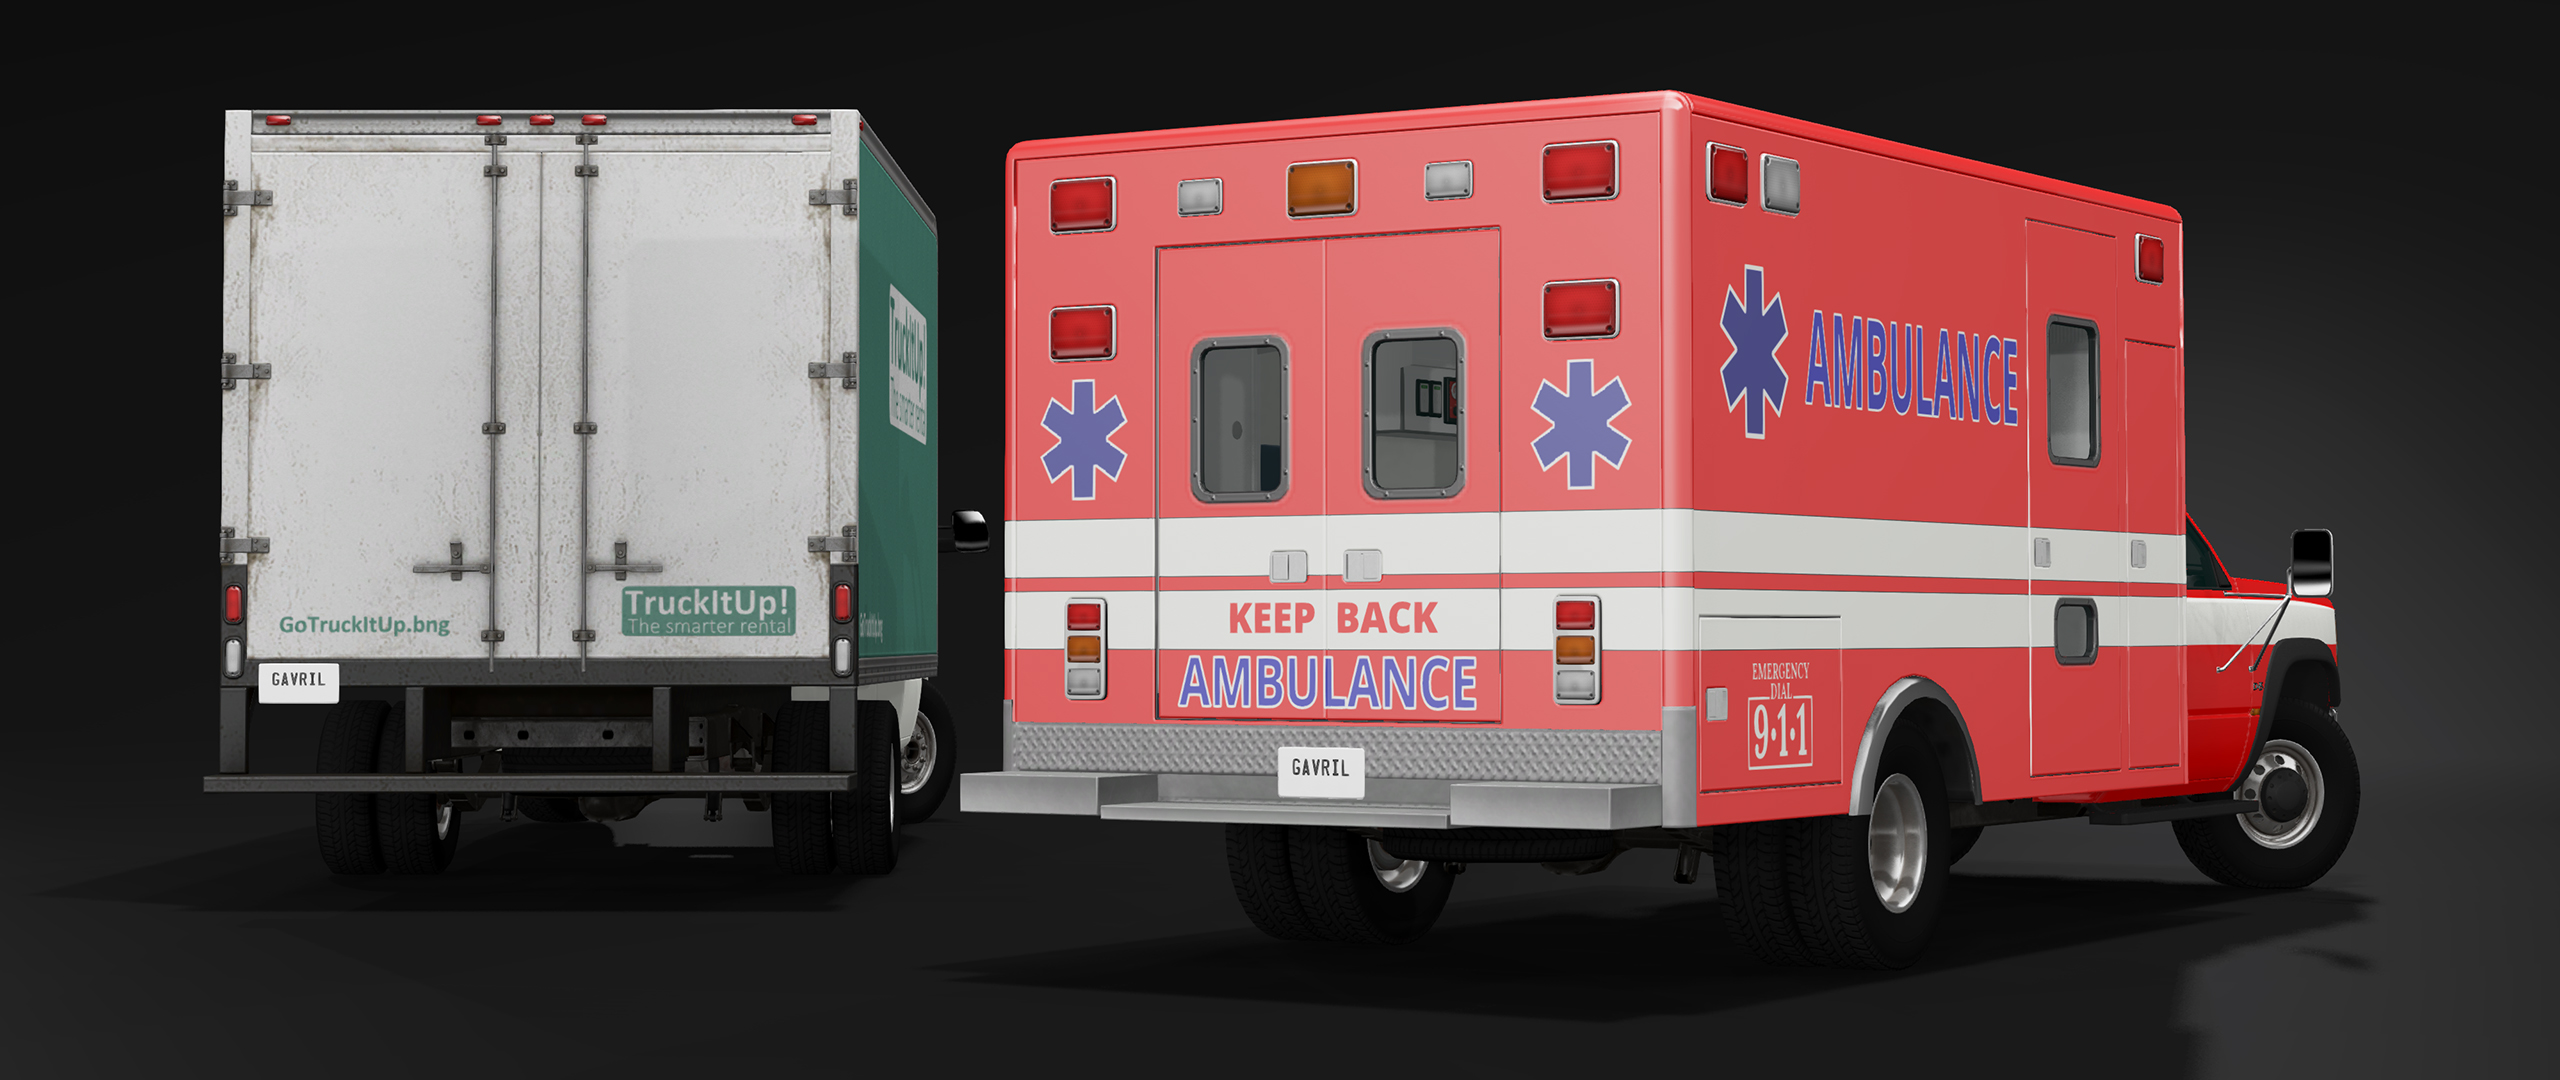 ambulance_taillights.jpg